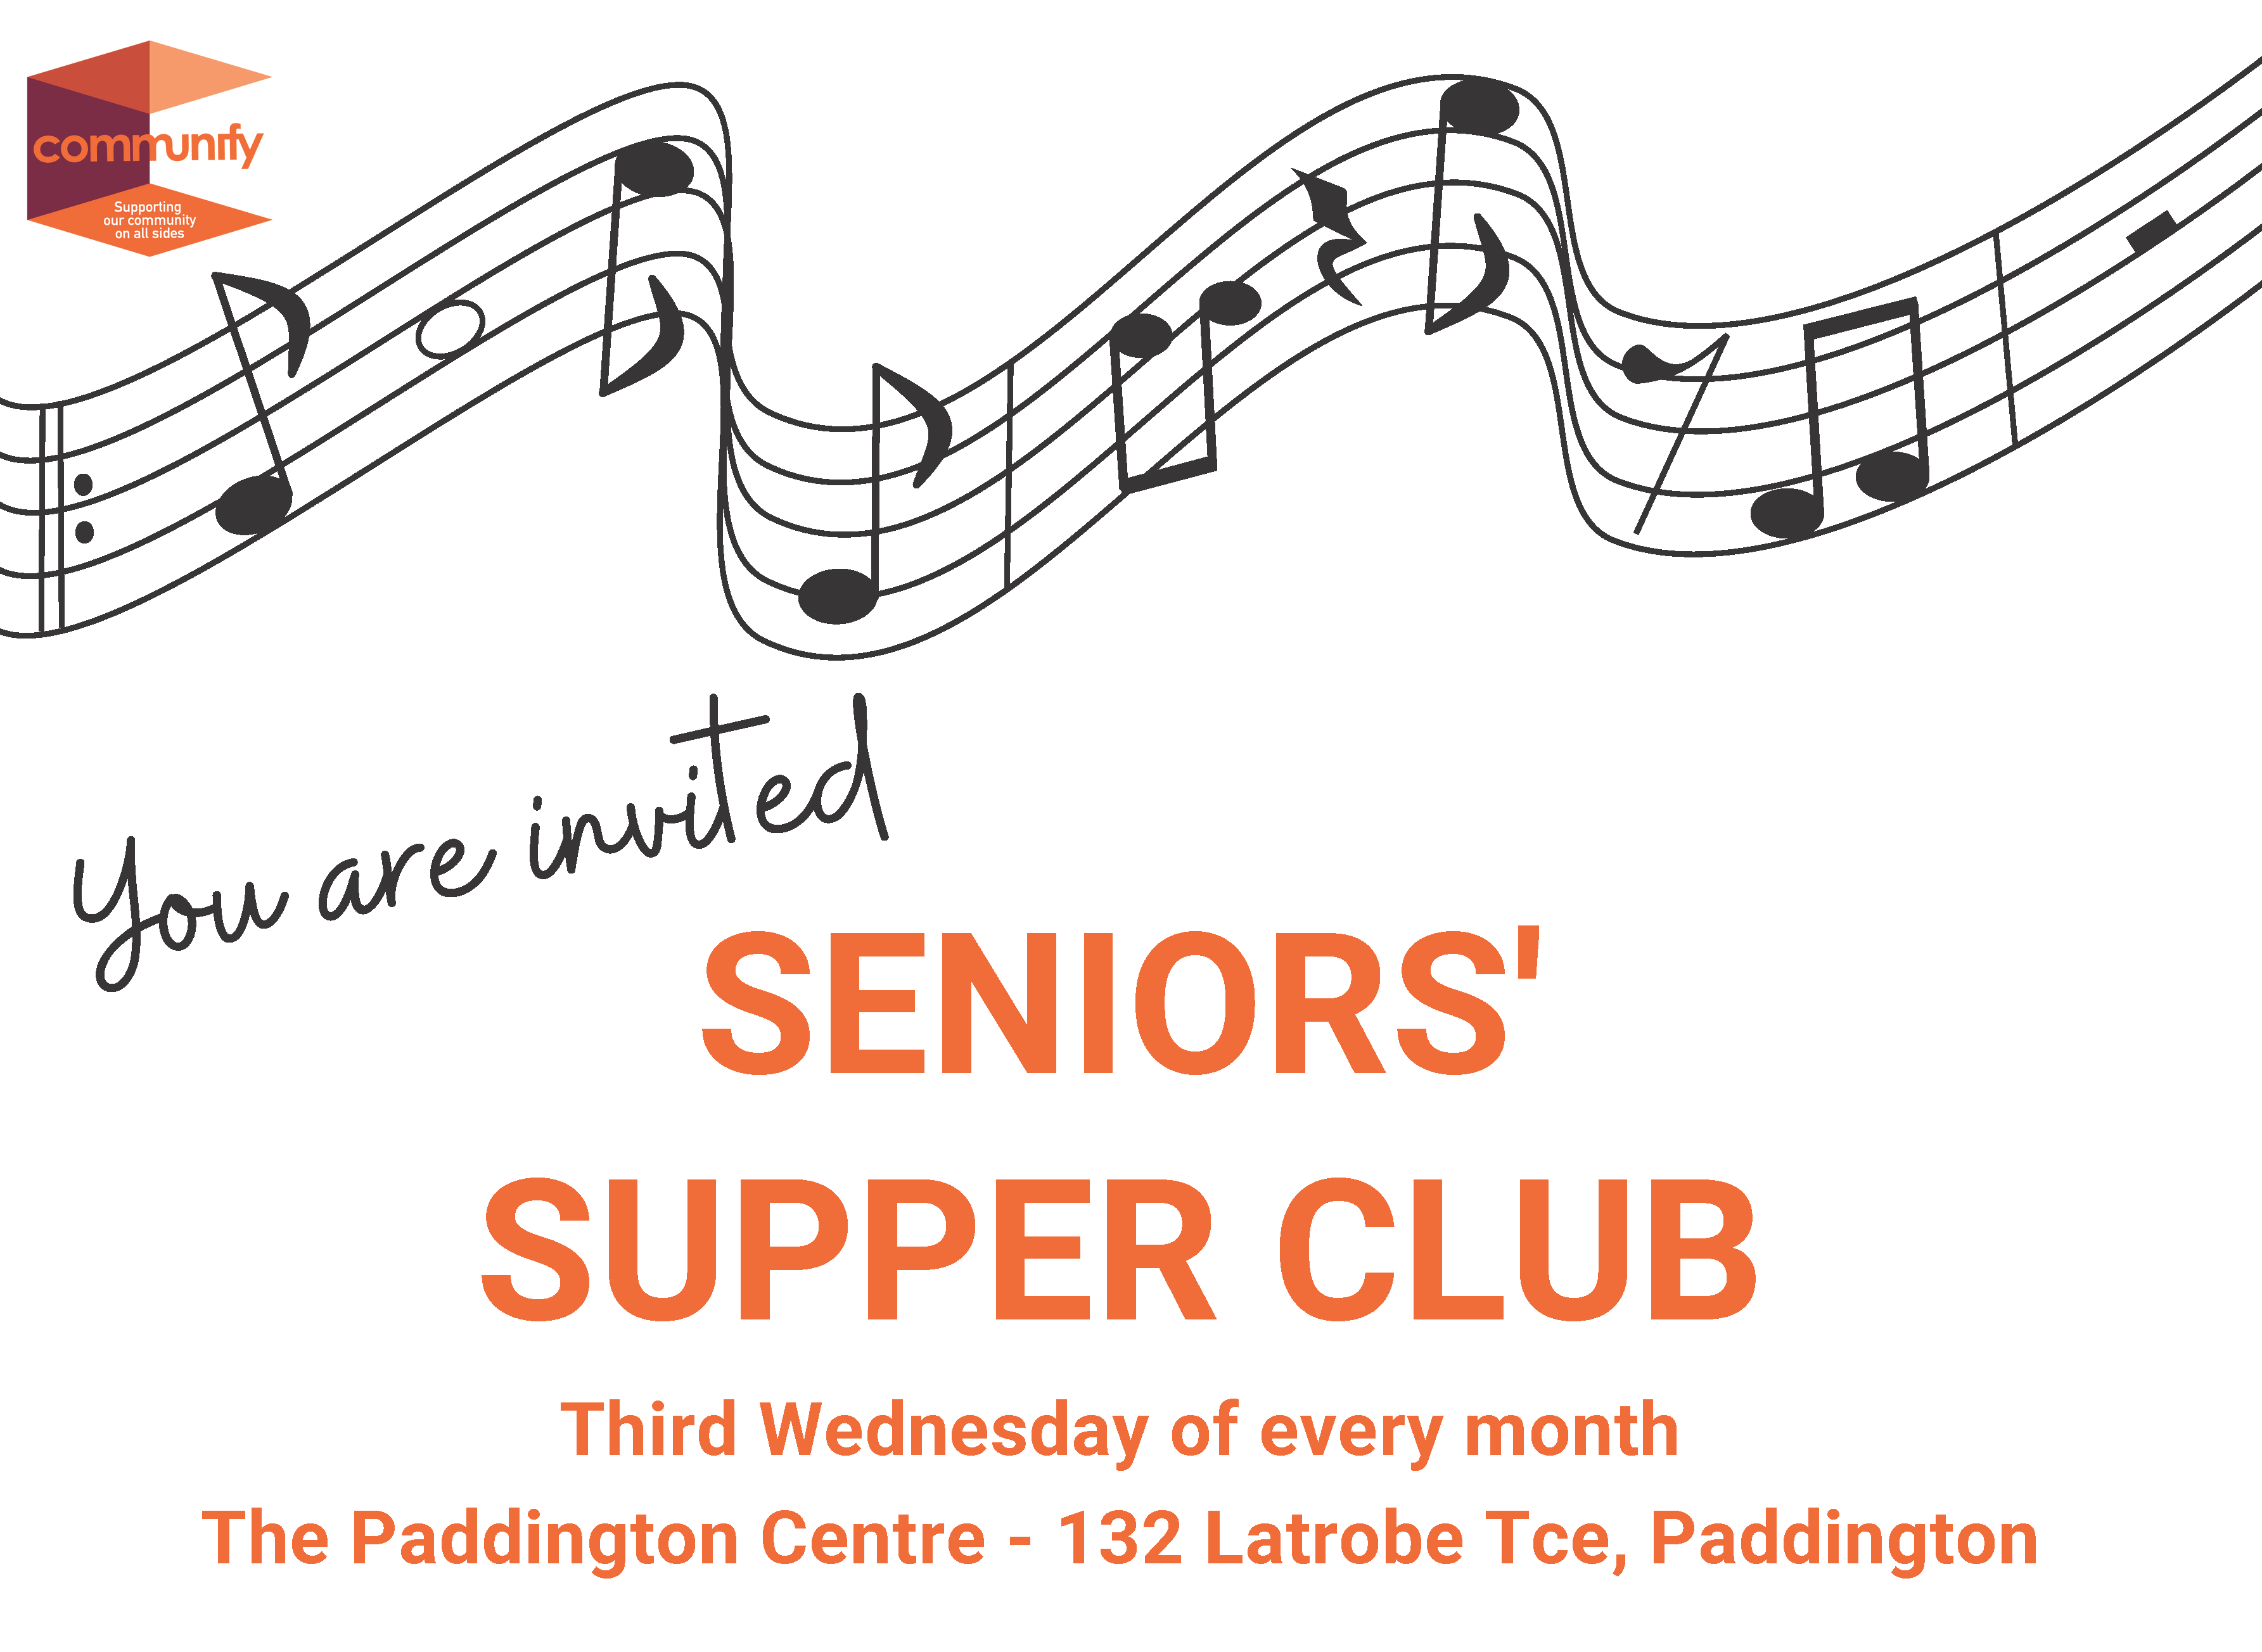 Senior's Supper Club